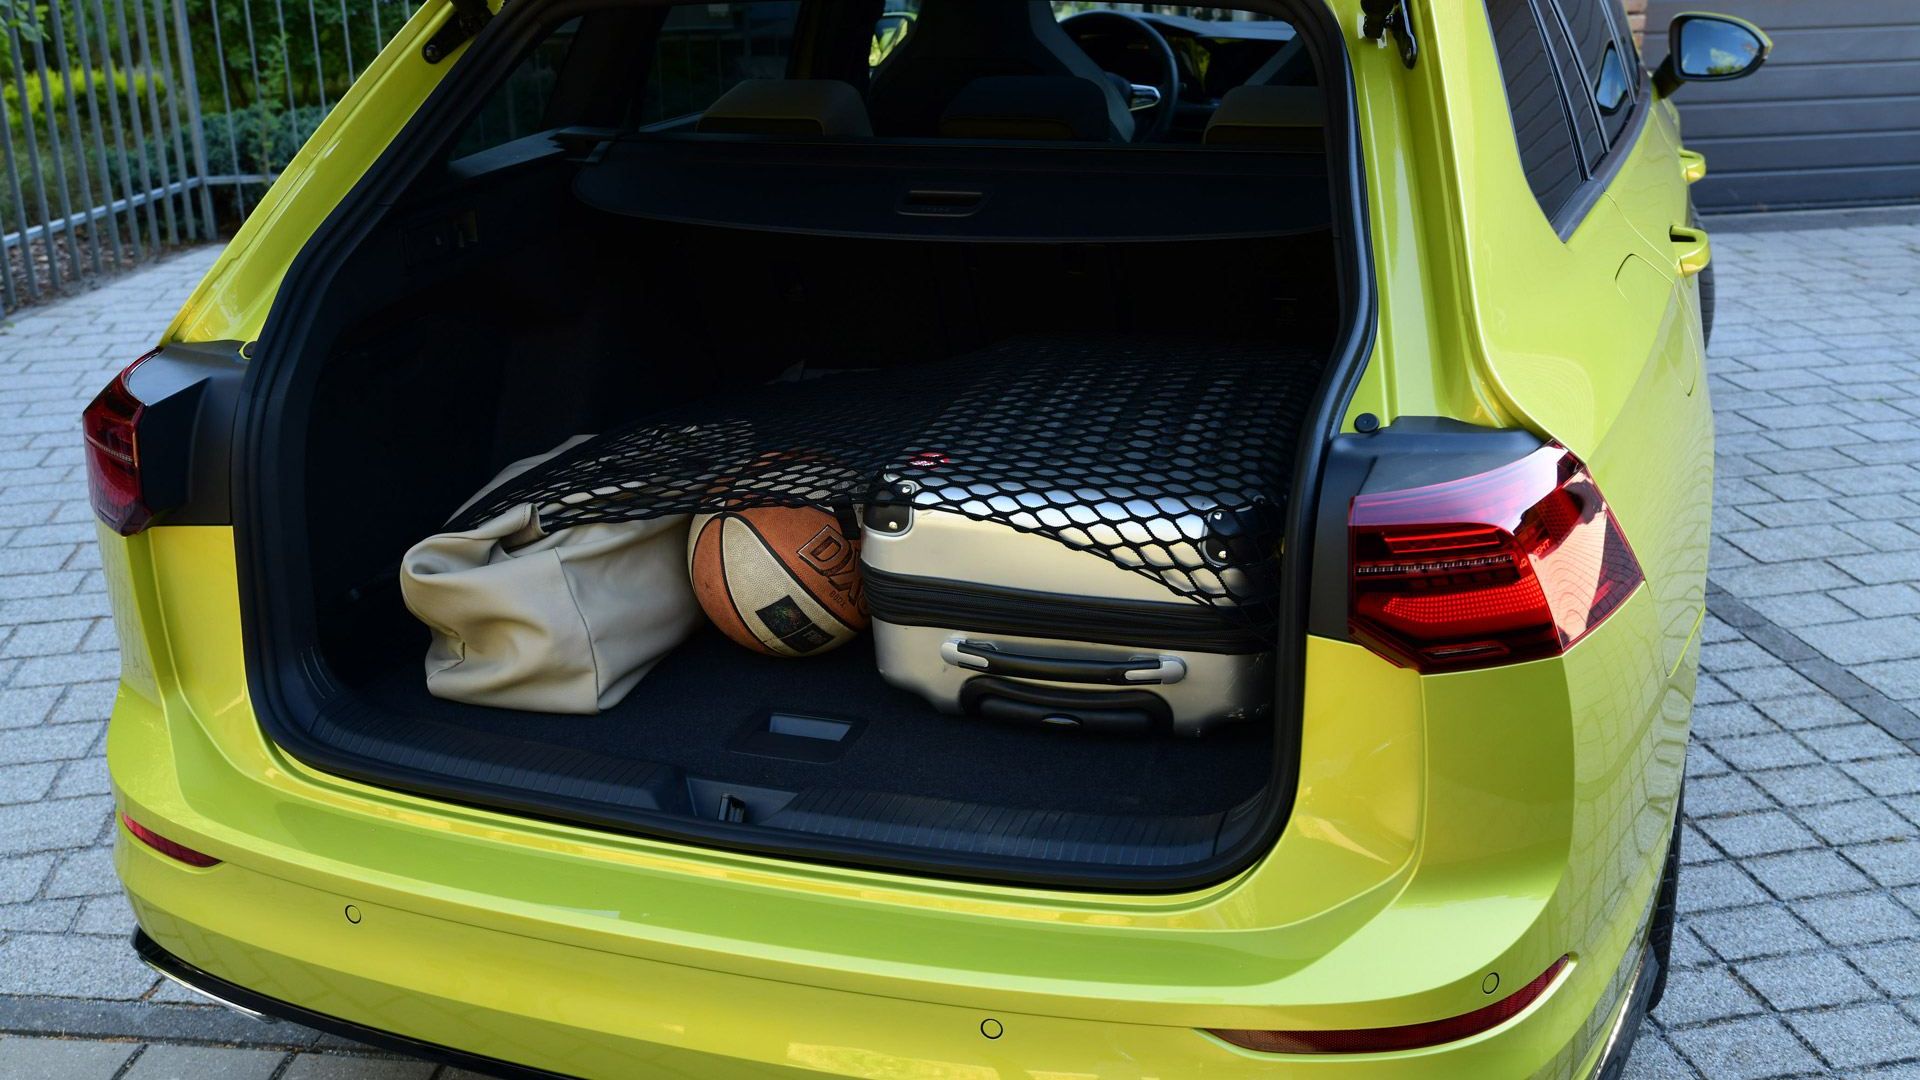 Beladener Kofferraum des VW Golf Variant